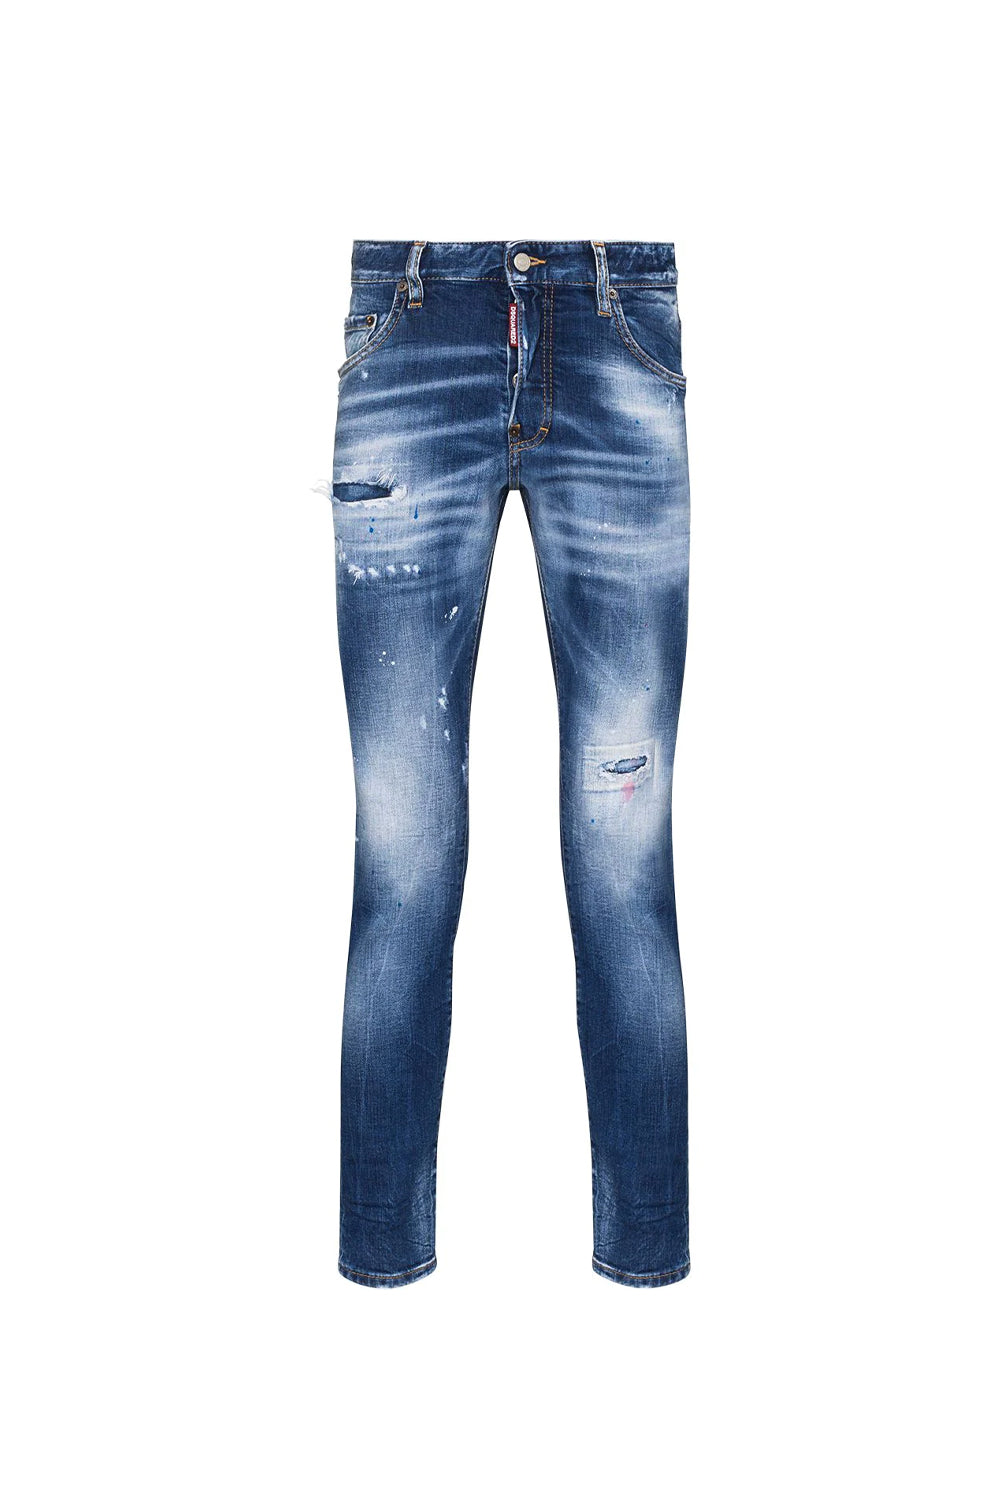 Dsquared2 Skater distressed jeans‏